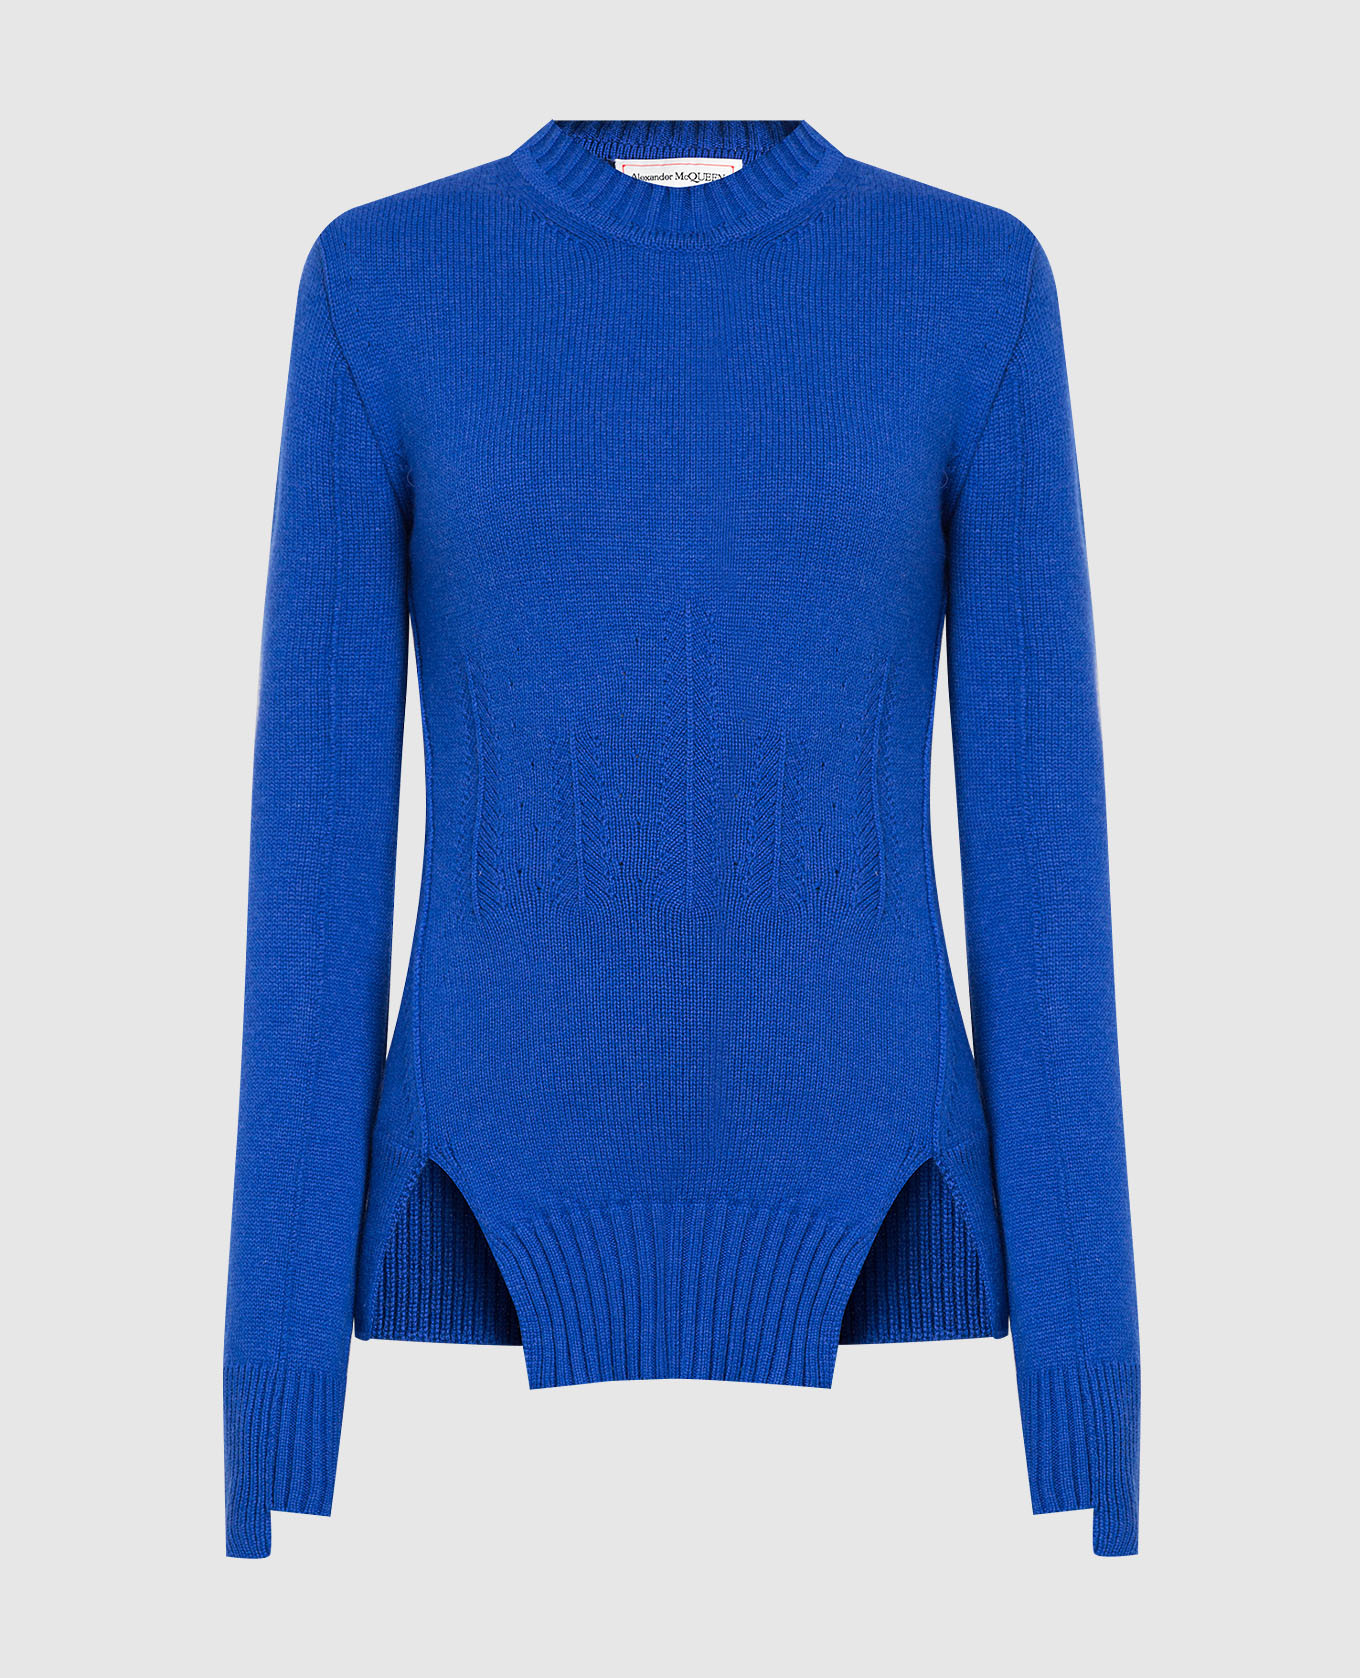 Blue textured cashmere jumper